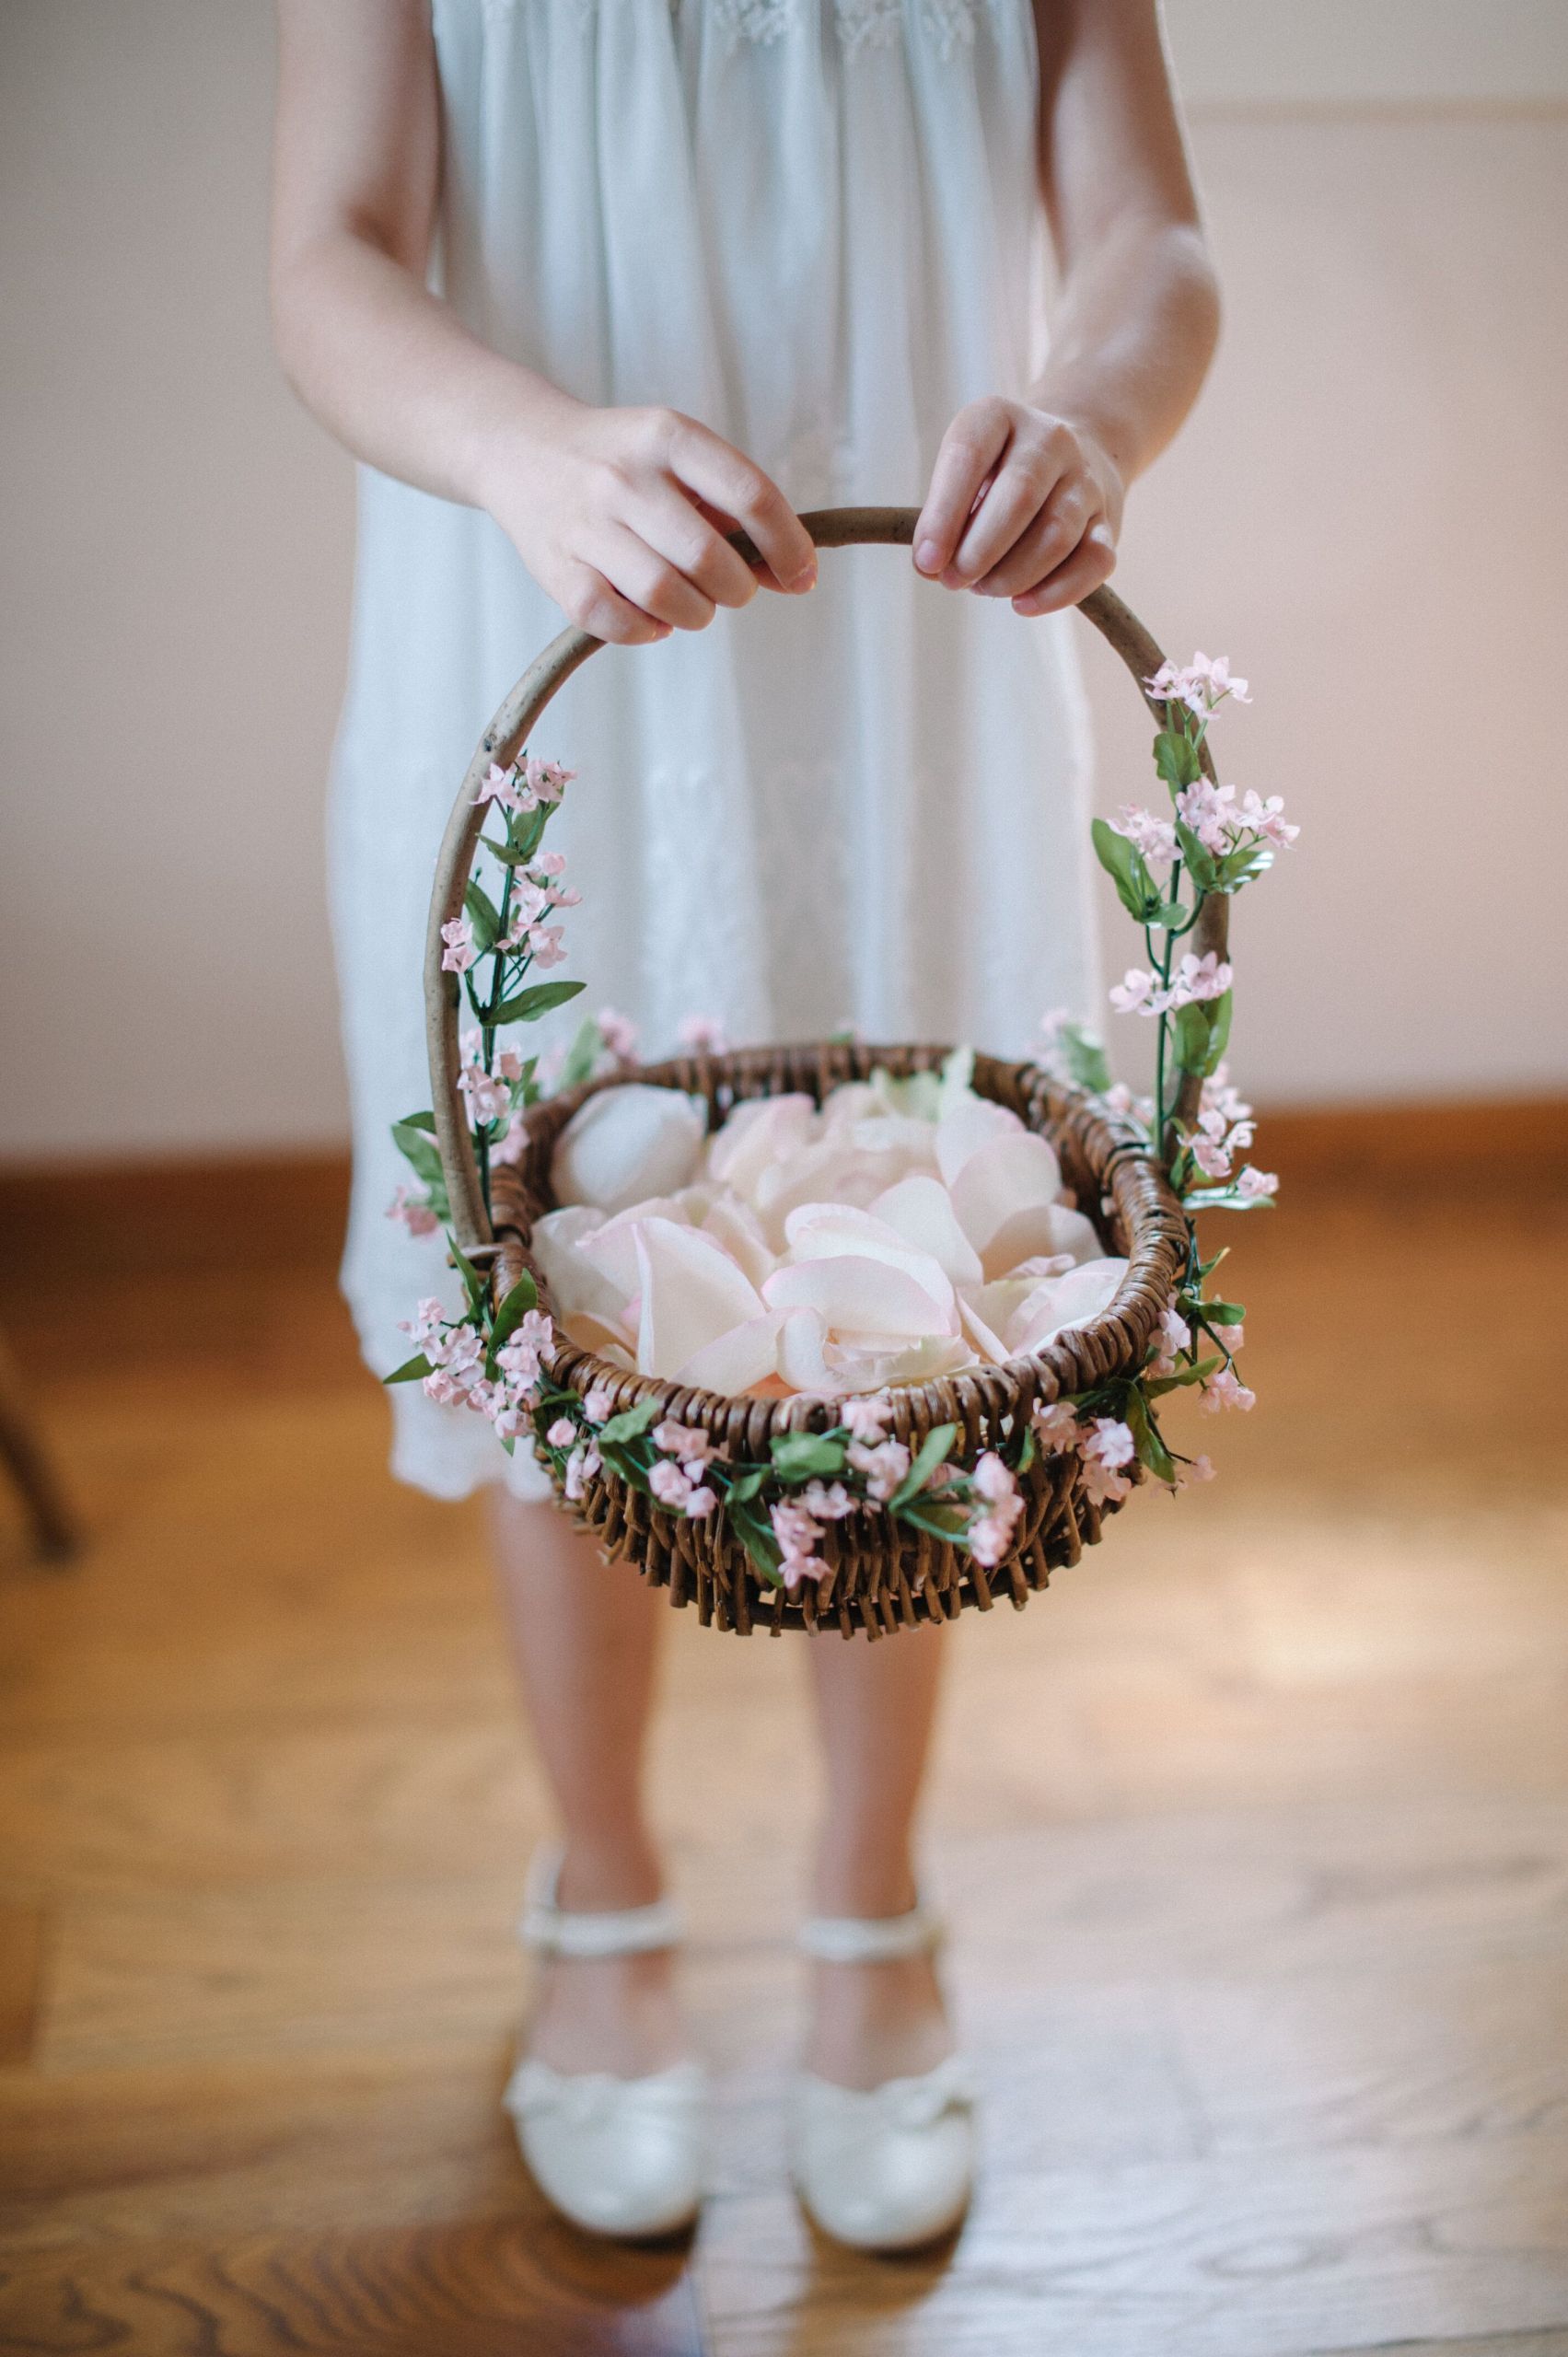 Wedding Flower Basket
 Flower Girl Basket With Pink Flowers